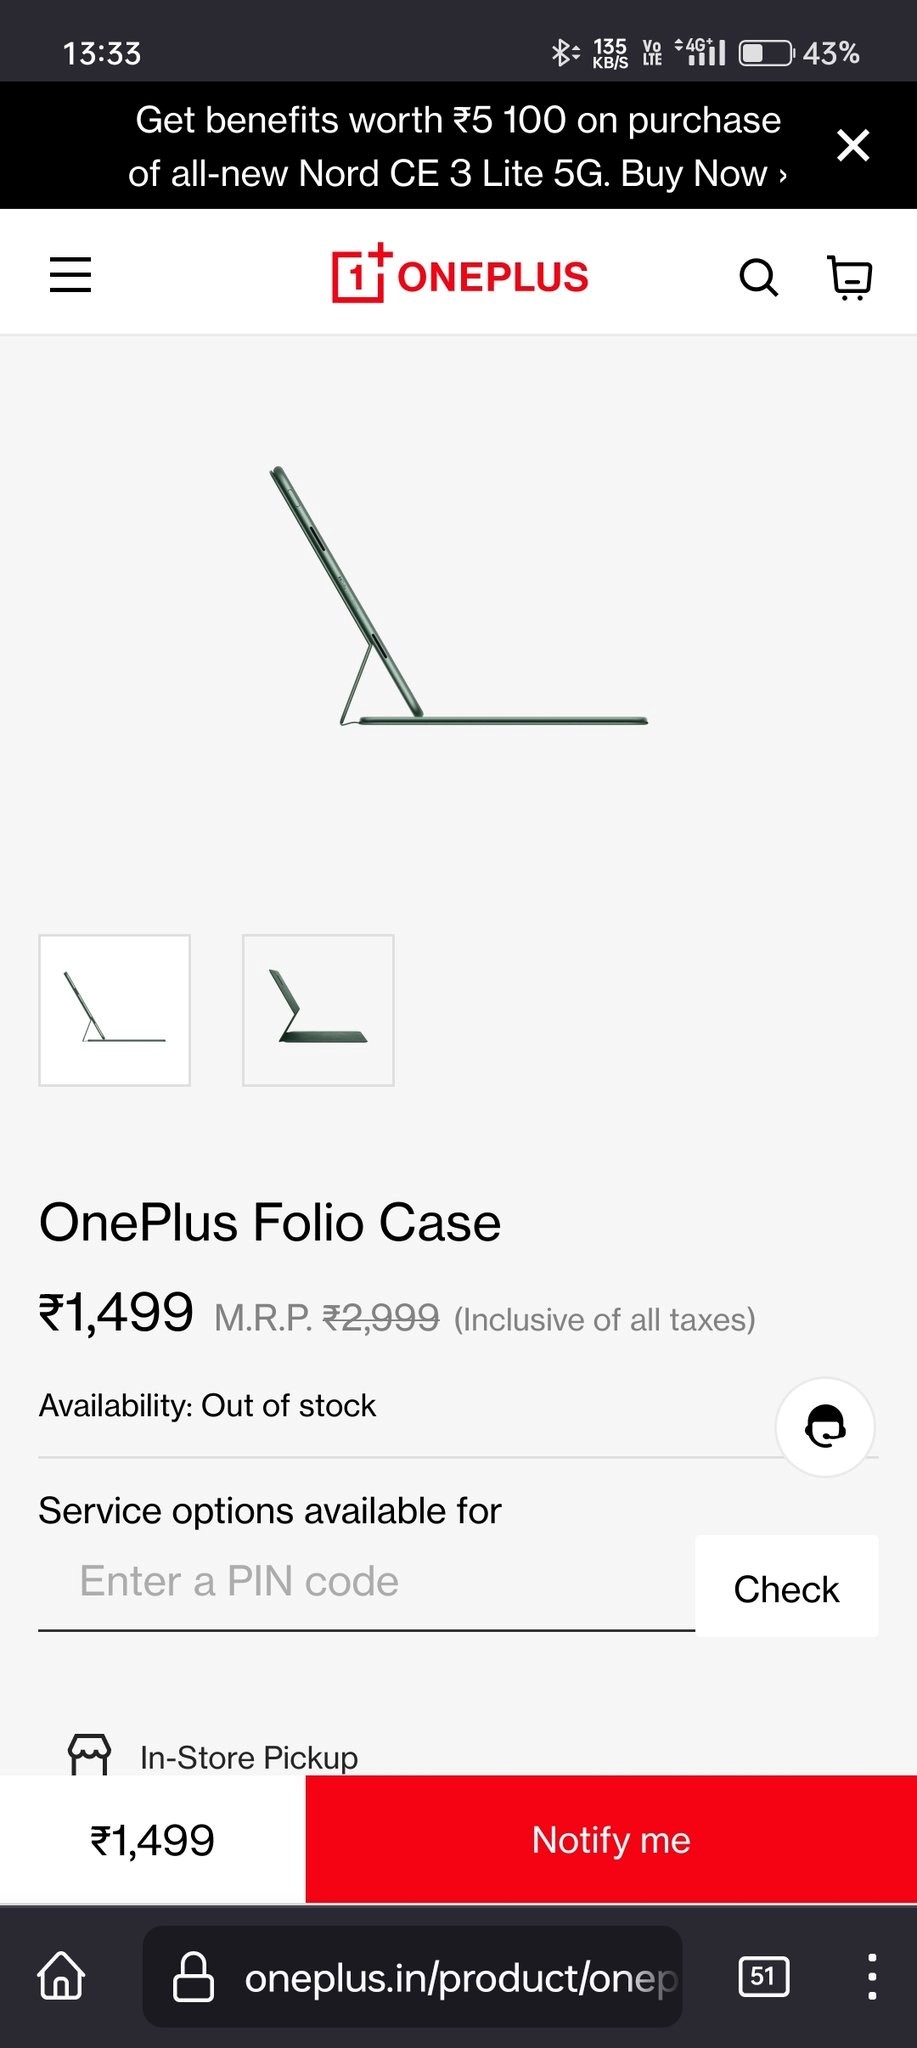 OnePlus Pad Price in India 